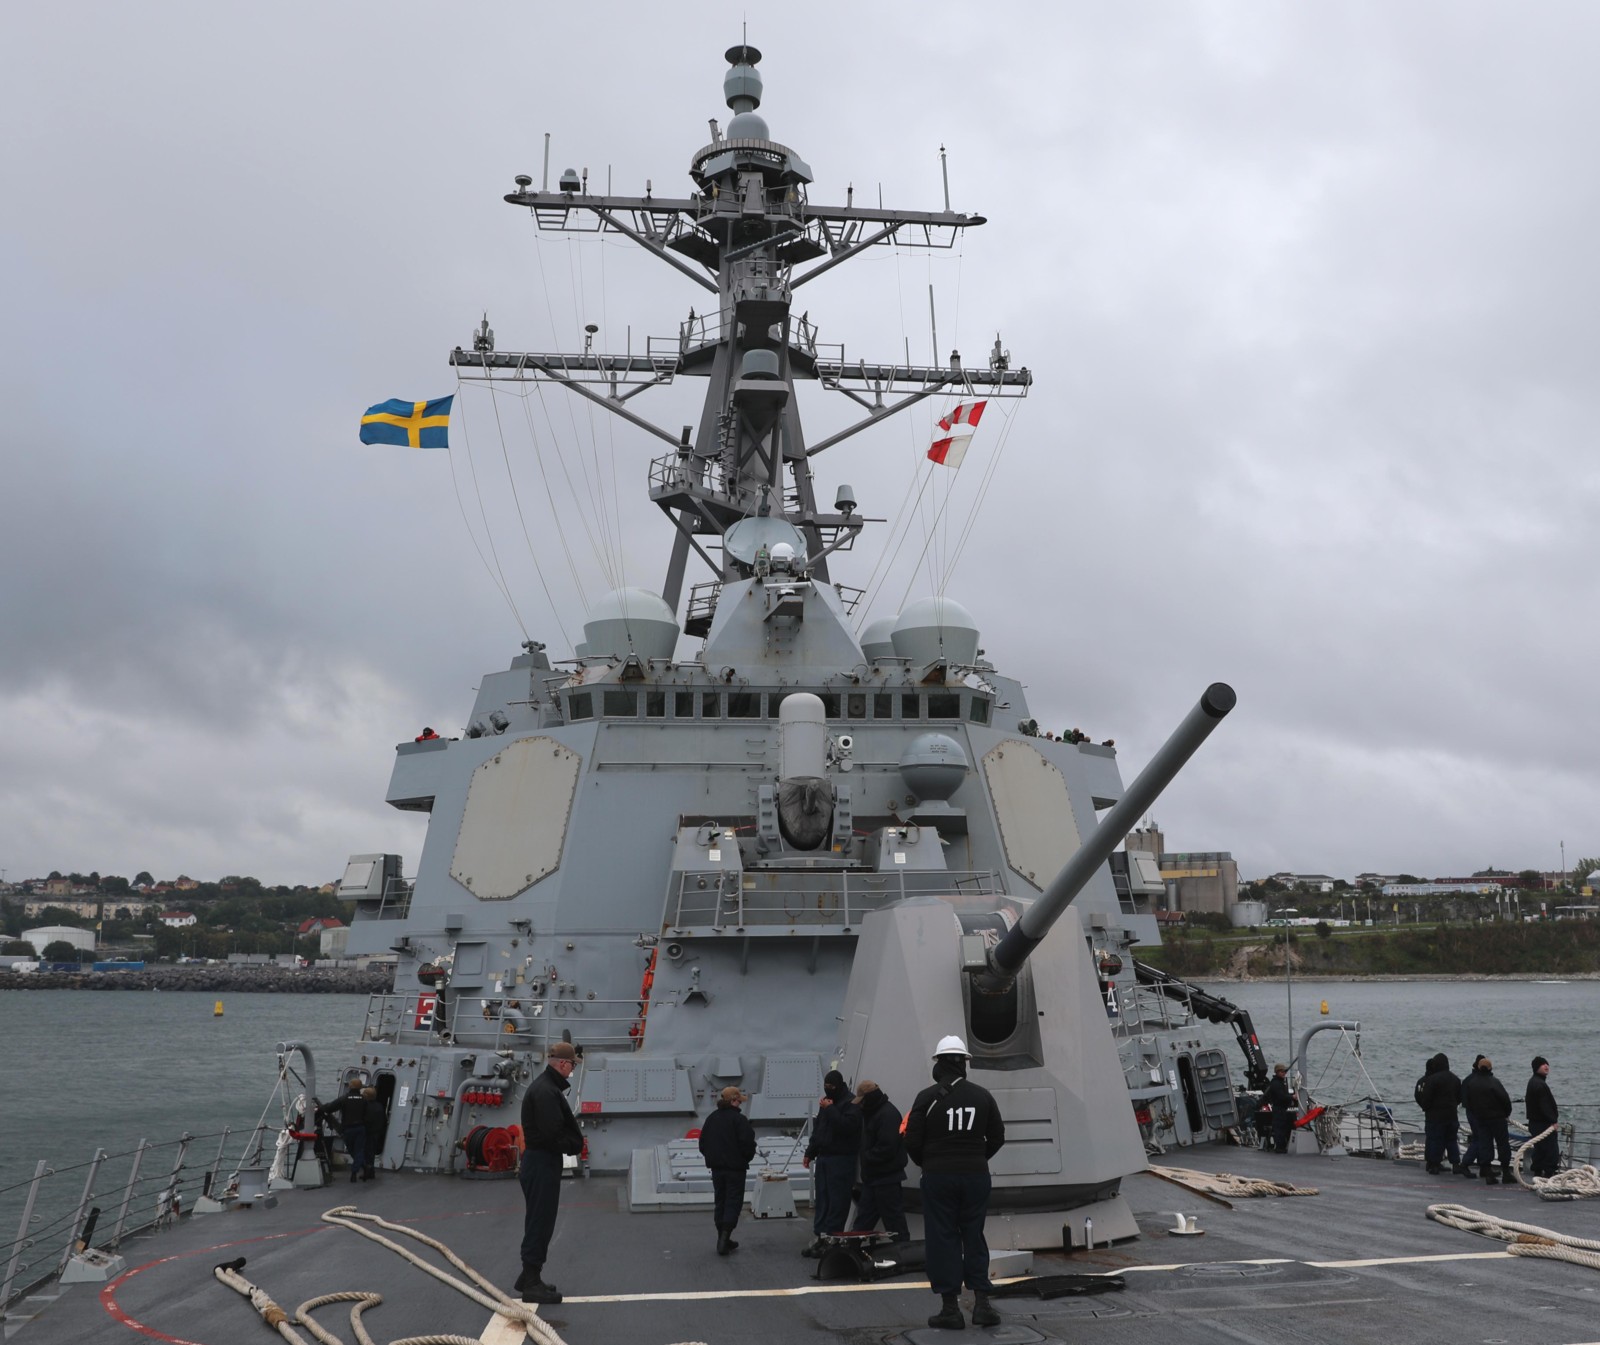 ddg-117 uss paul ignatius arleigh burke class guided missile destroyer aegis us navy visby gotland sweden 70